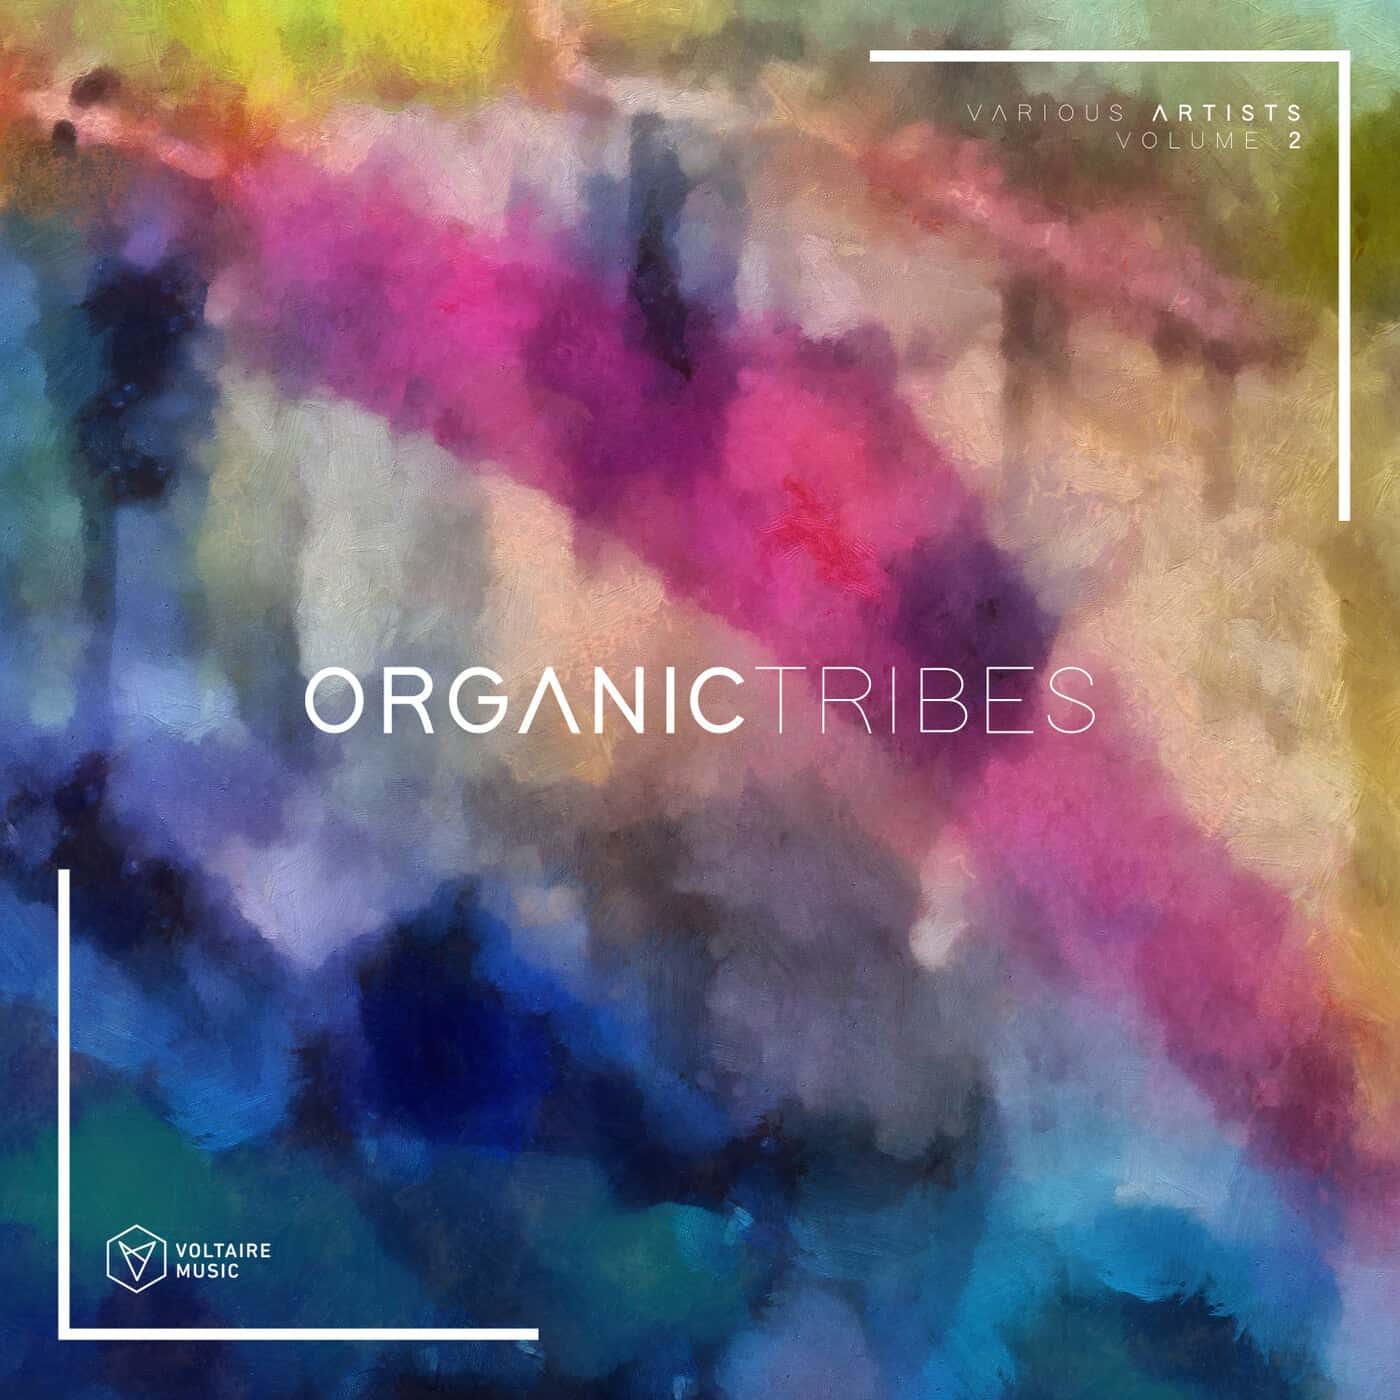 Download VA - Organic Tribes Vol. 2 on Electrobuzz